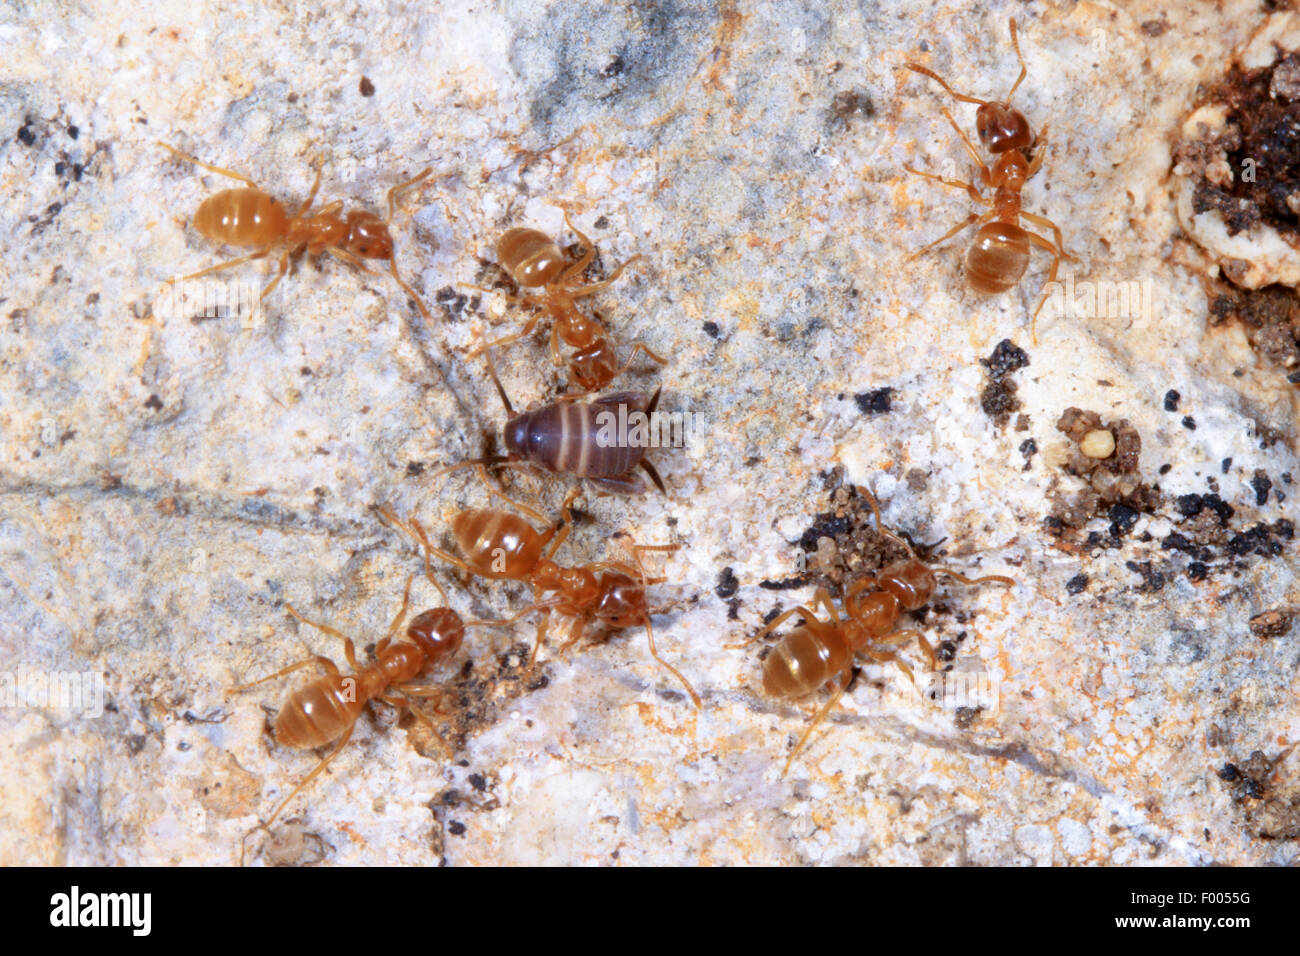 Ant-loving cricket, Ant cricket, Myrmecophilous cricket, Ant's-nest cricket (Myrmecophilus acervorum), amongst ants, Germany Stock Photo